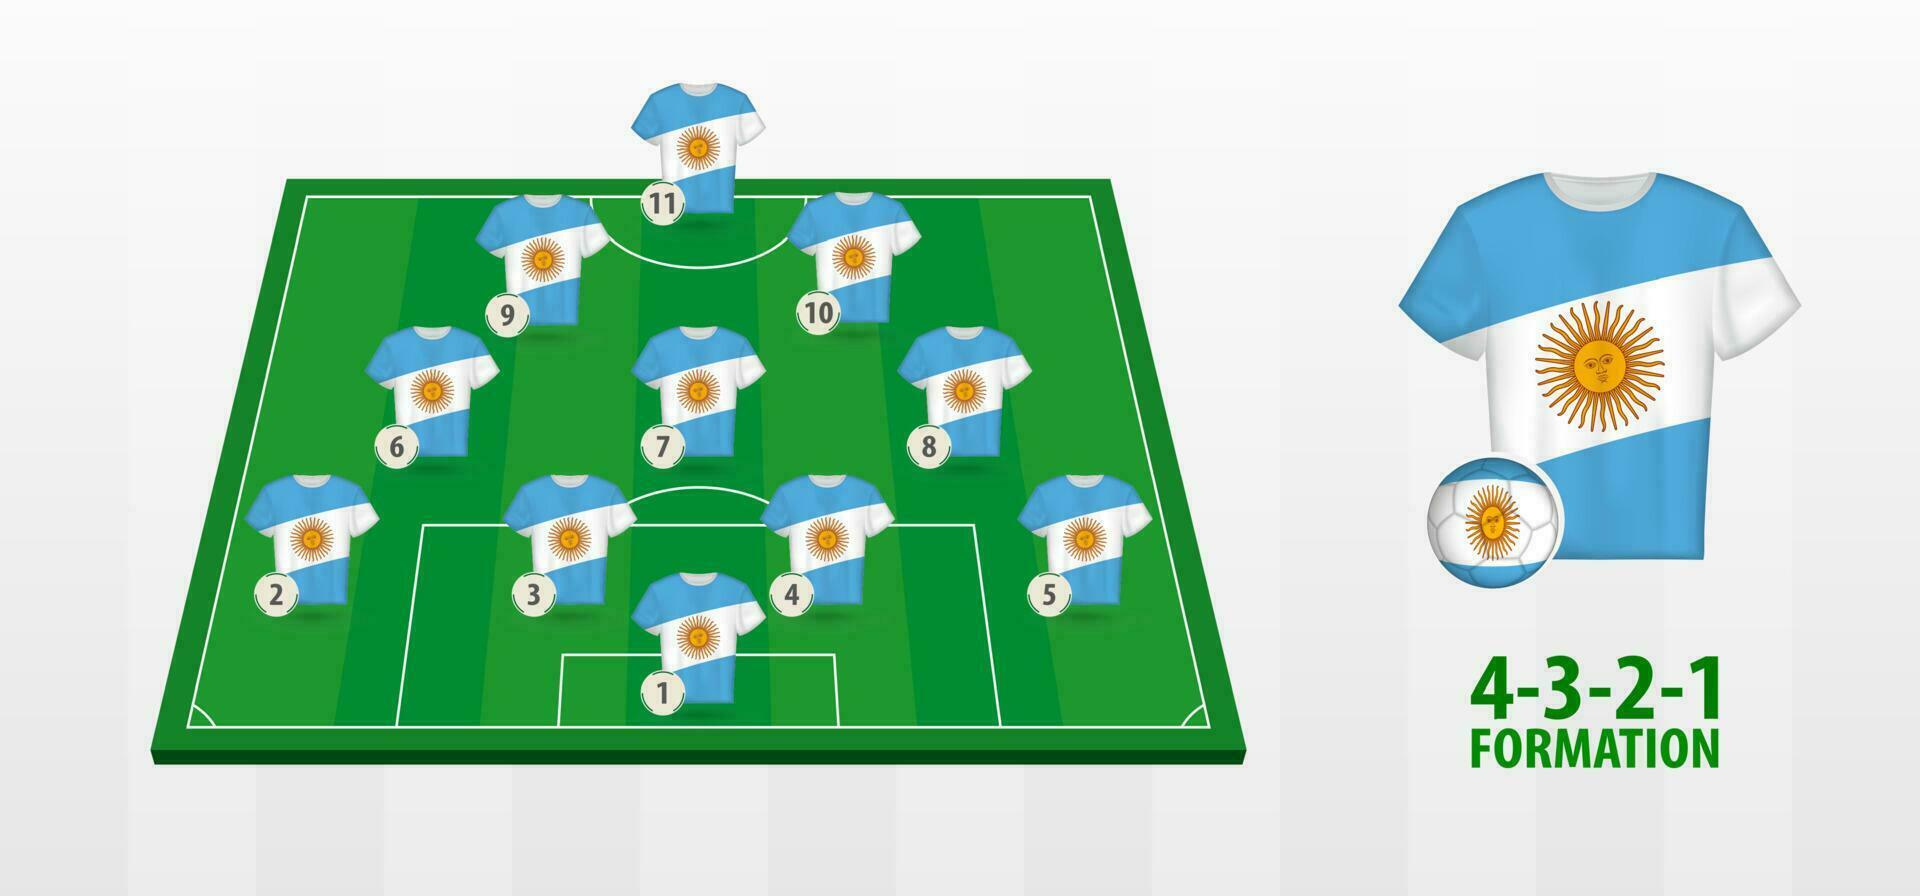 Argentina National Football Team Formation on Football Field. vector